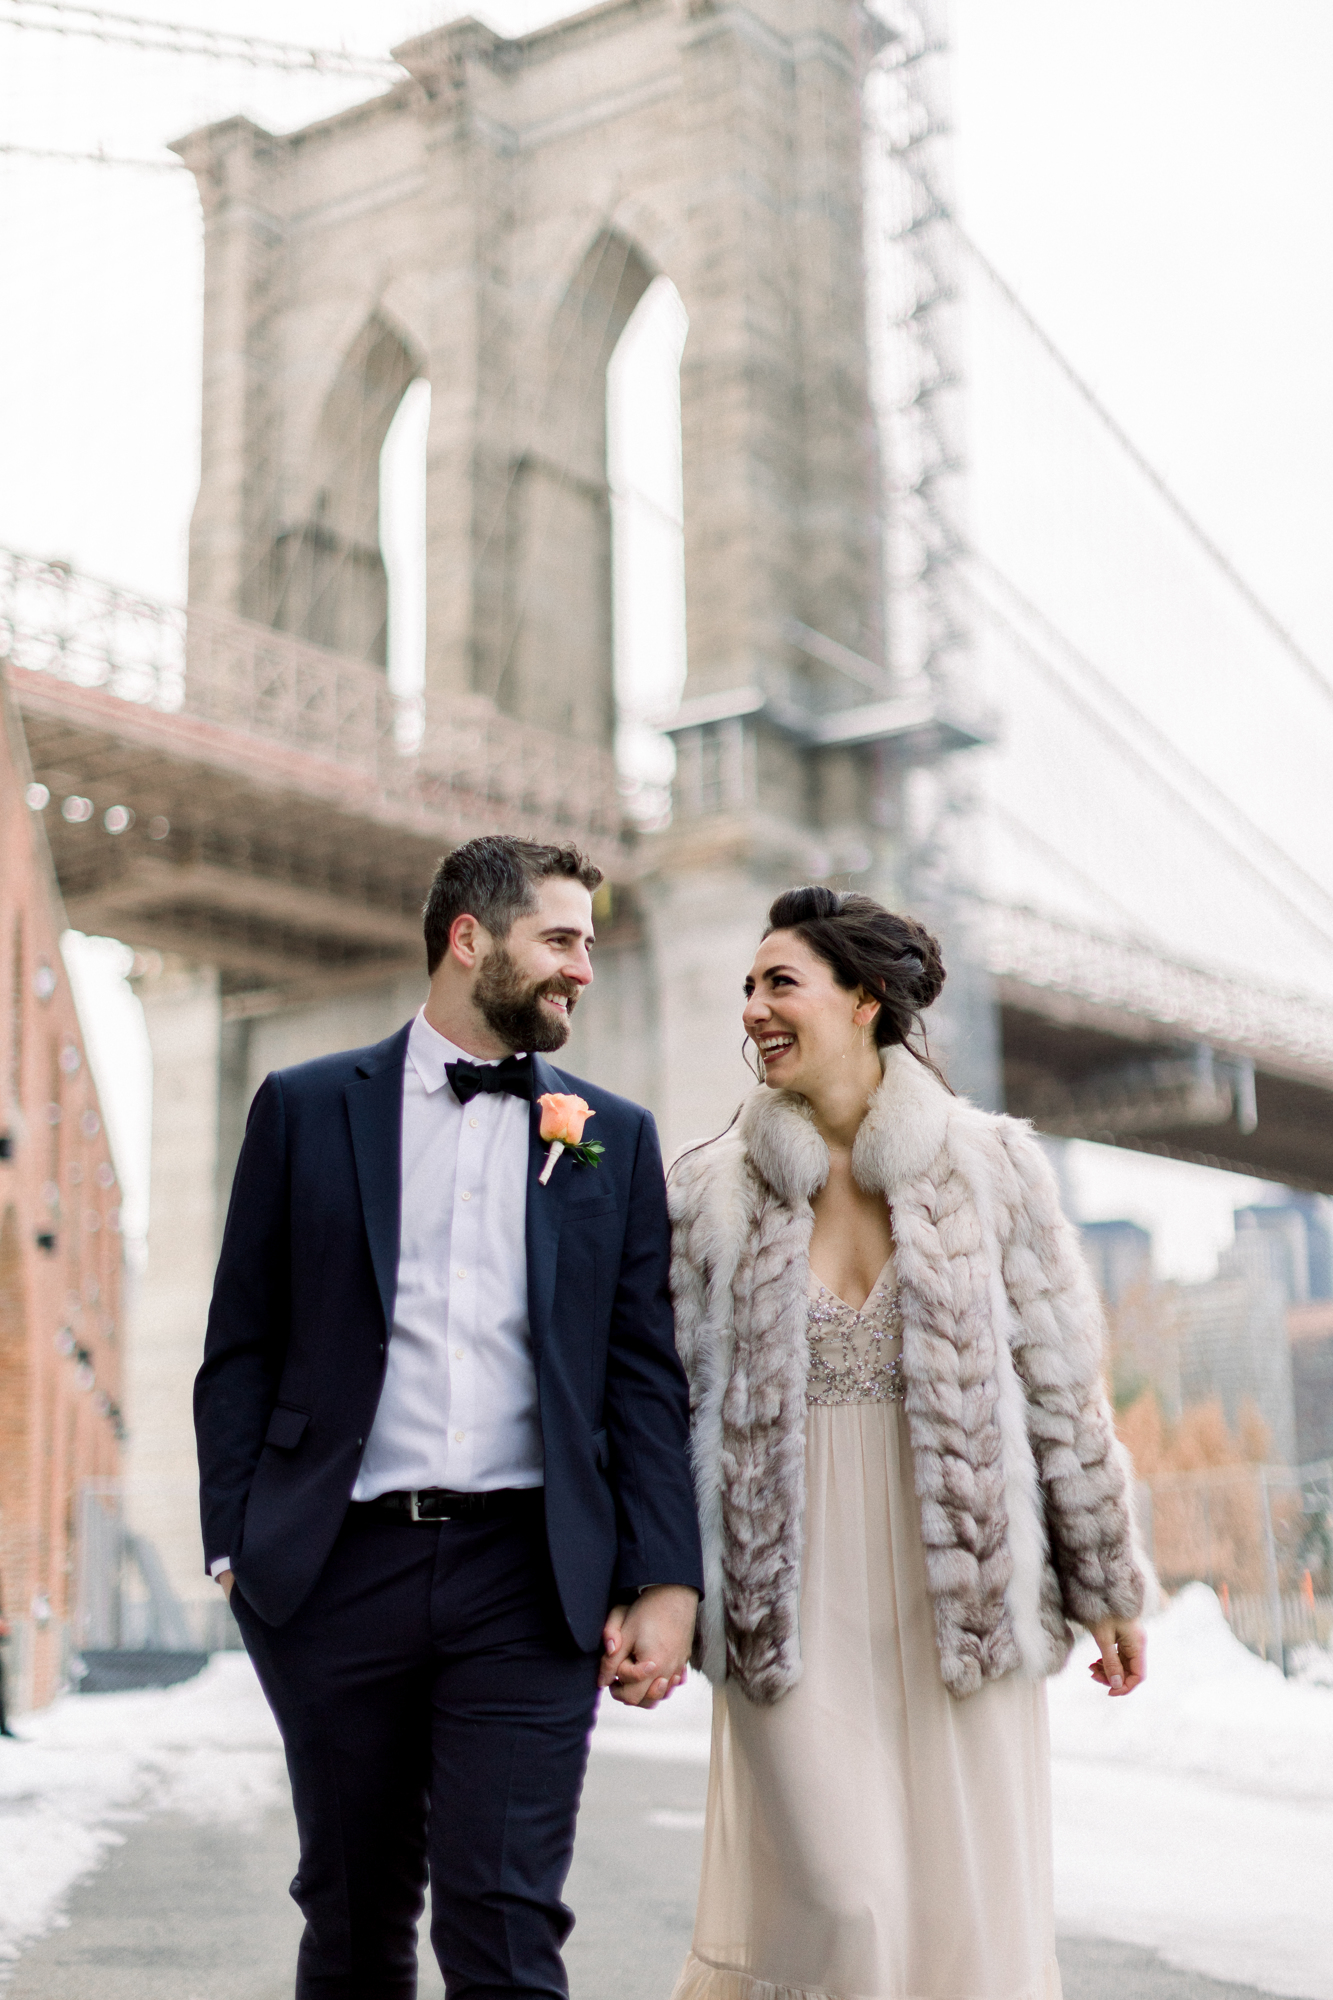 Beautiful wedding photographers in New York City